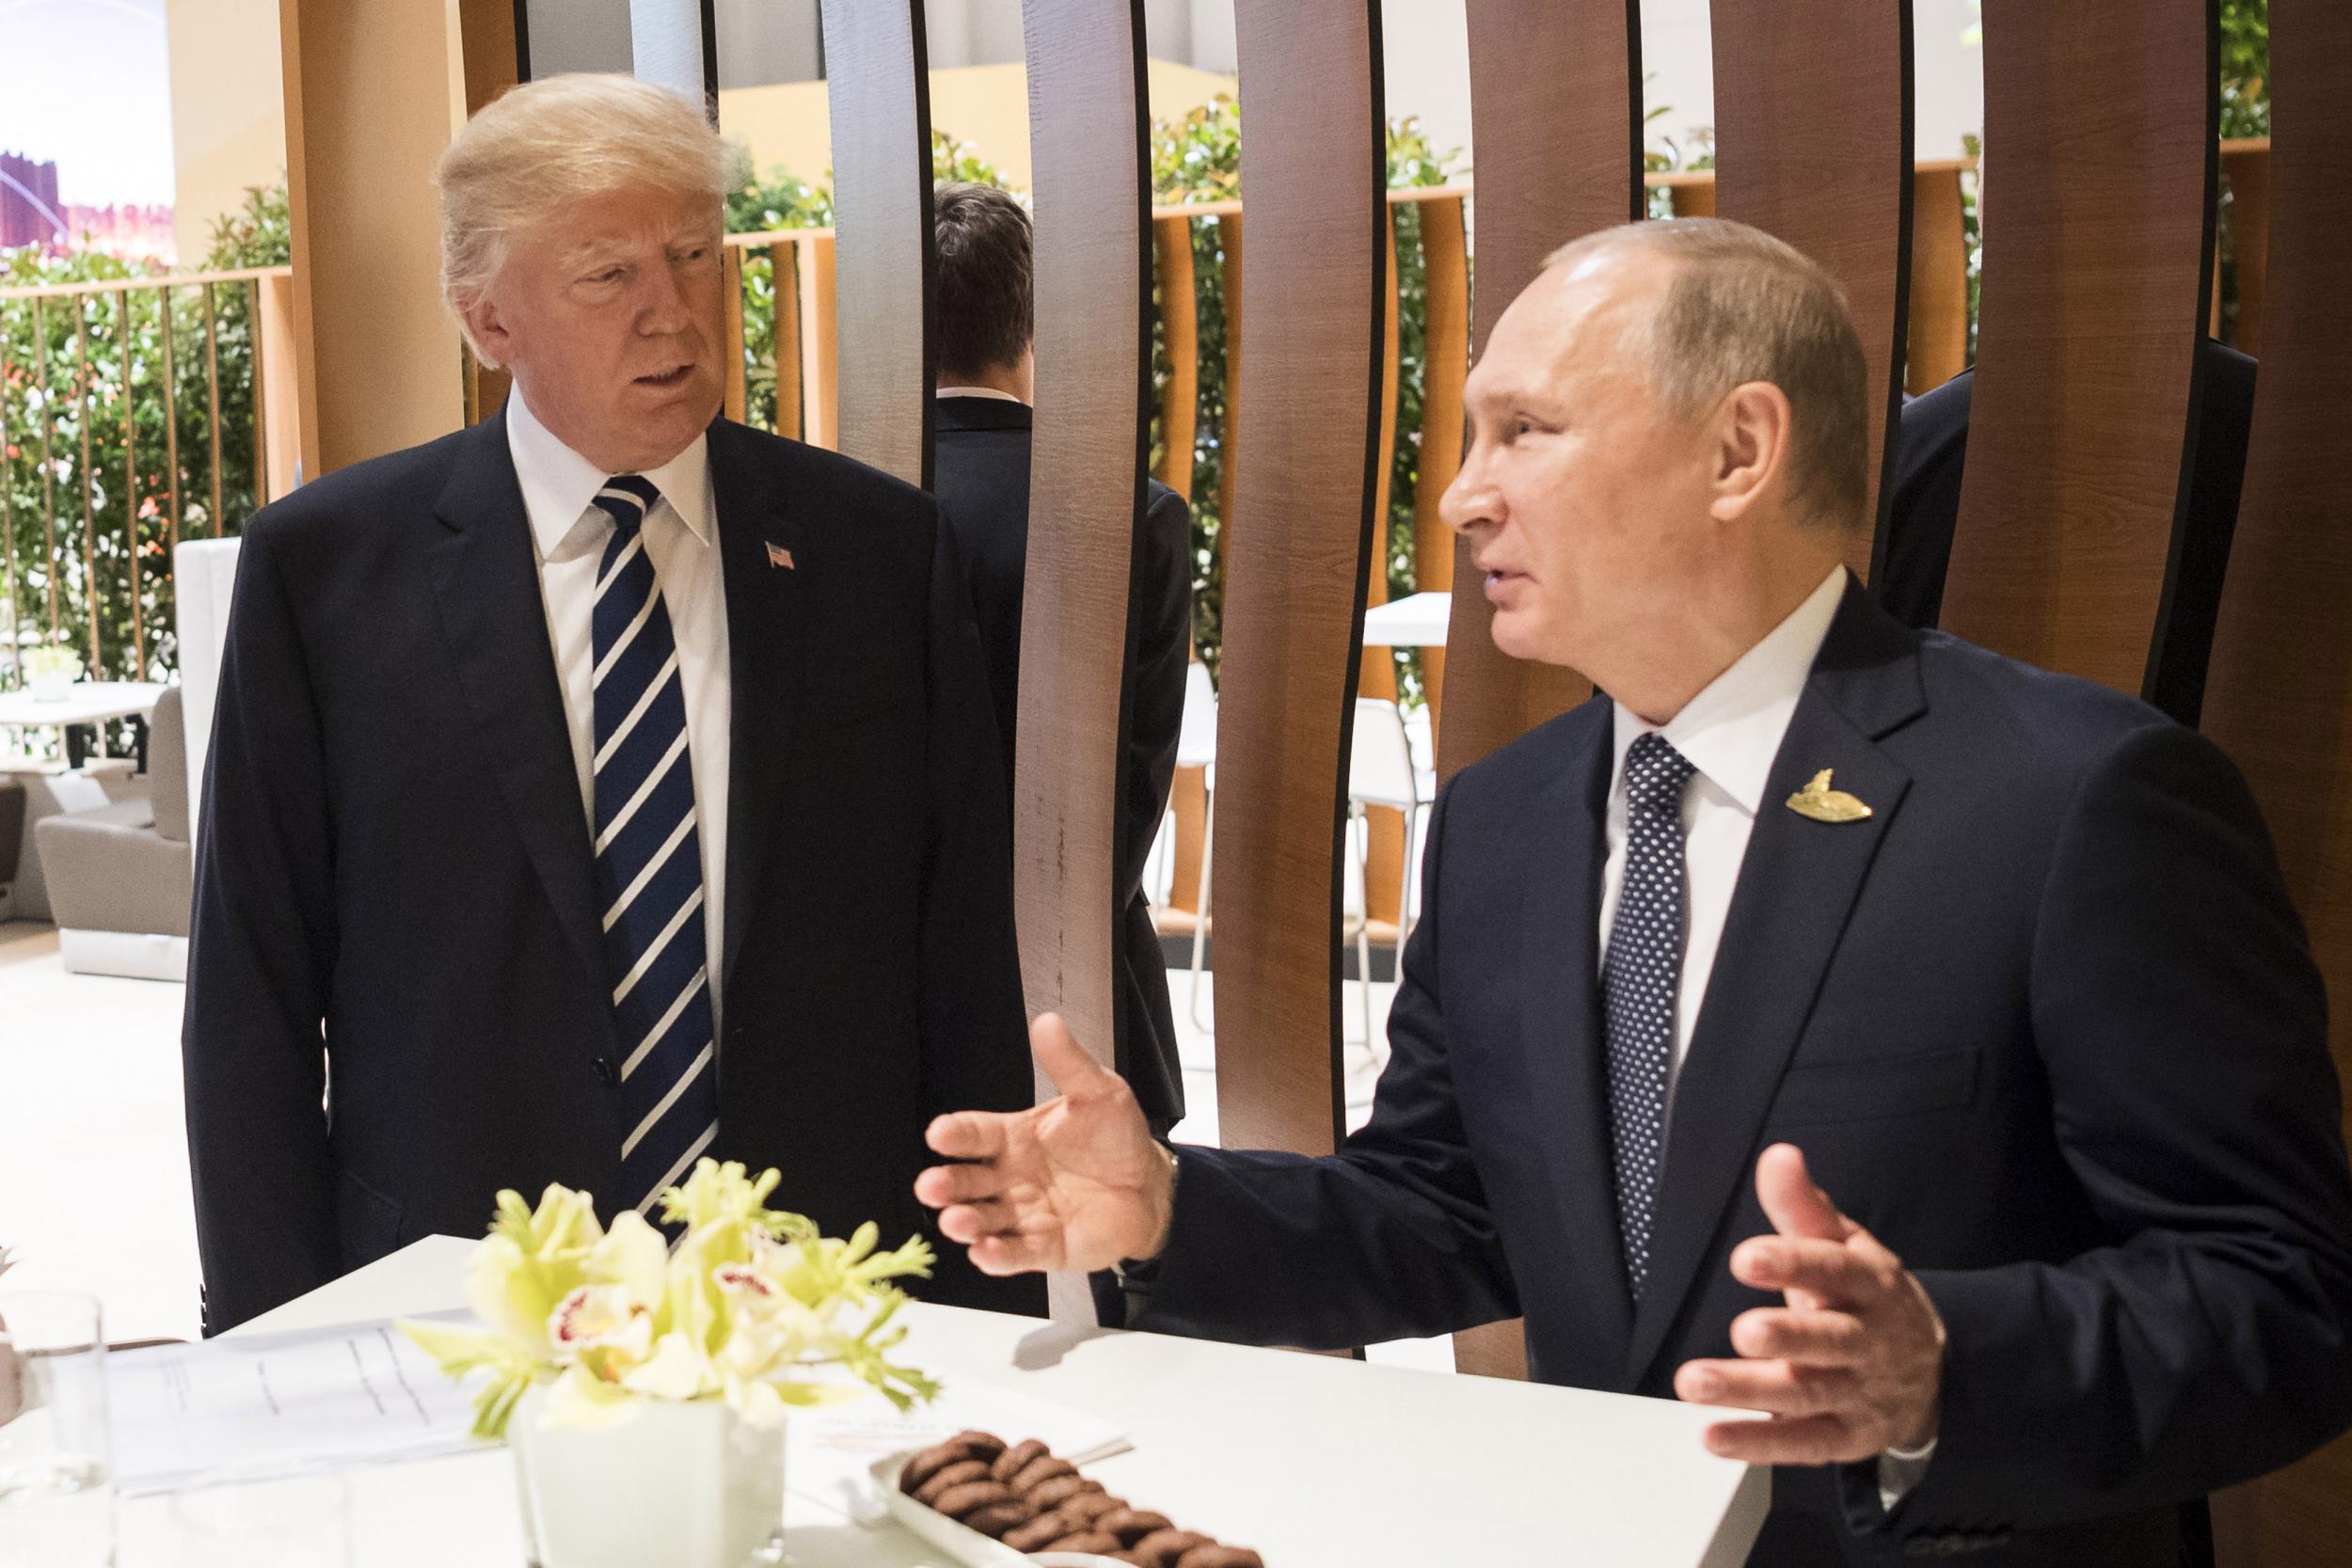 Donald Trump with Vladimir Putin during the Hamburg G20 summit